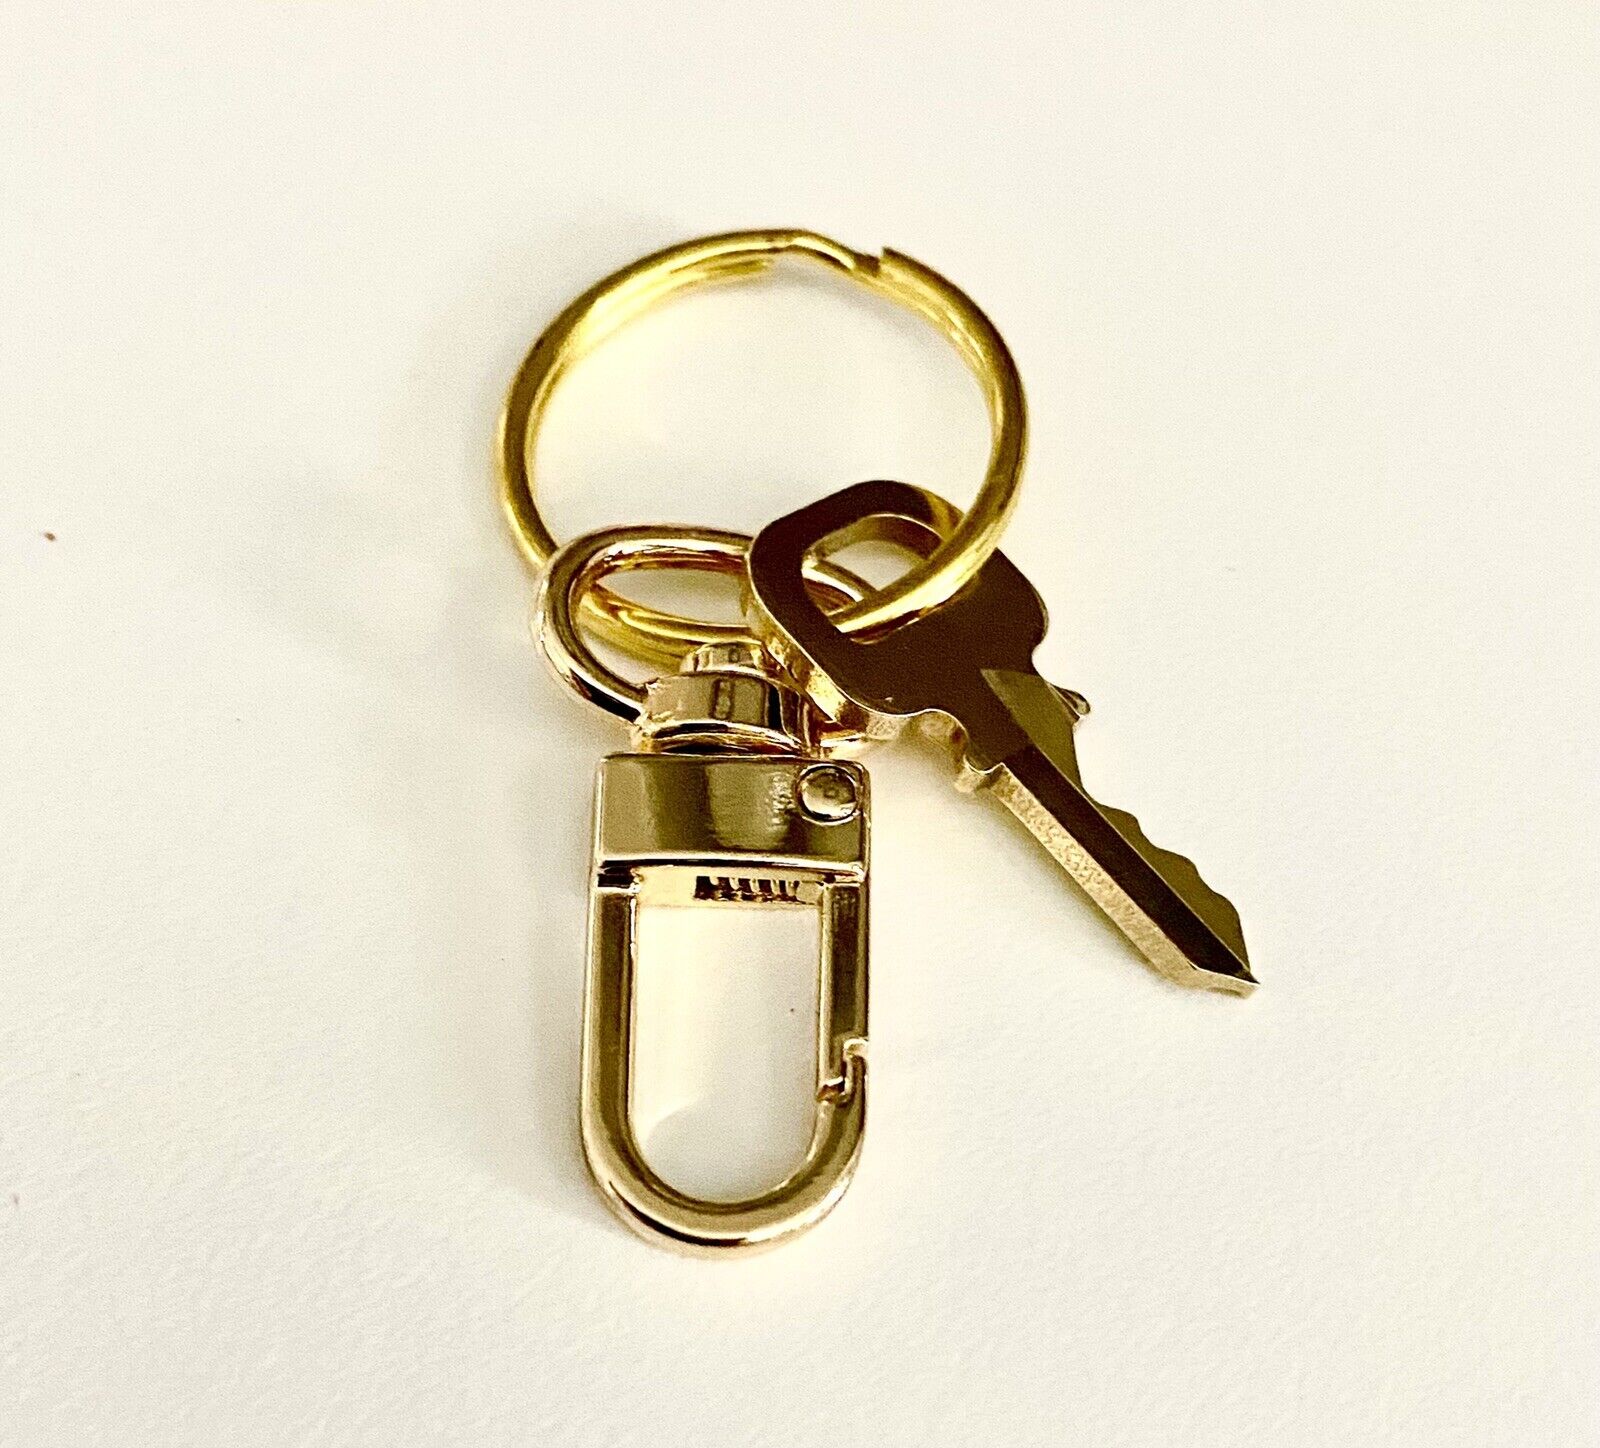 Louis Vuitton Key 308 Brass Goldtone Polished 100% Genuine